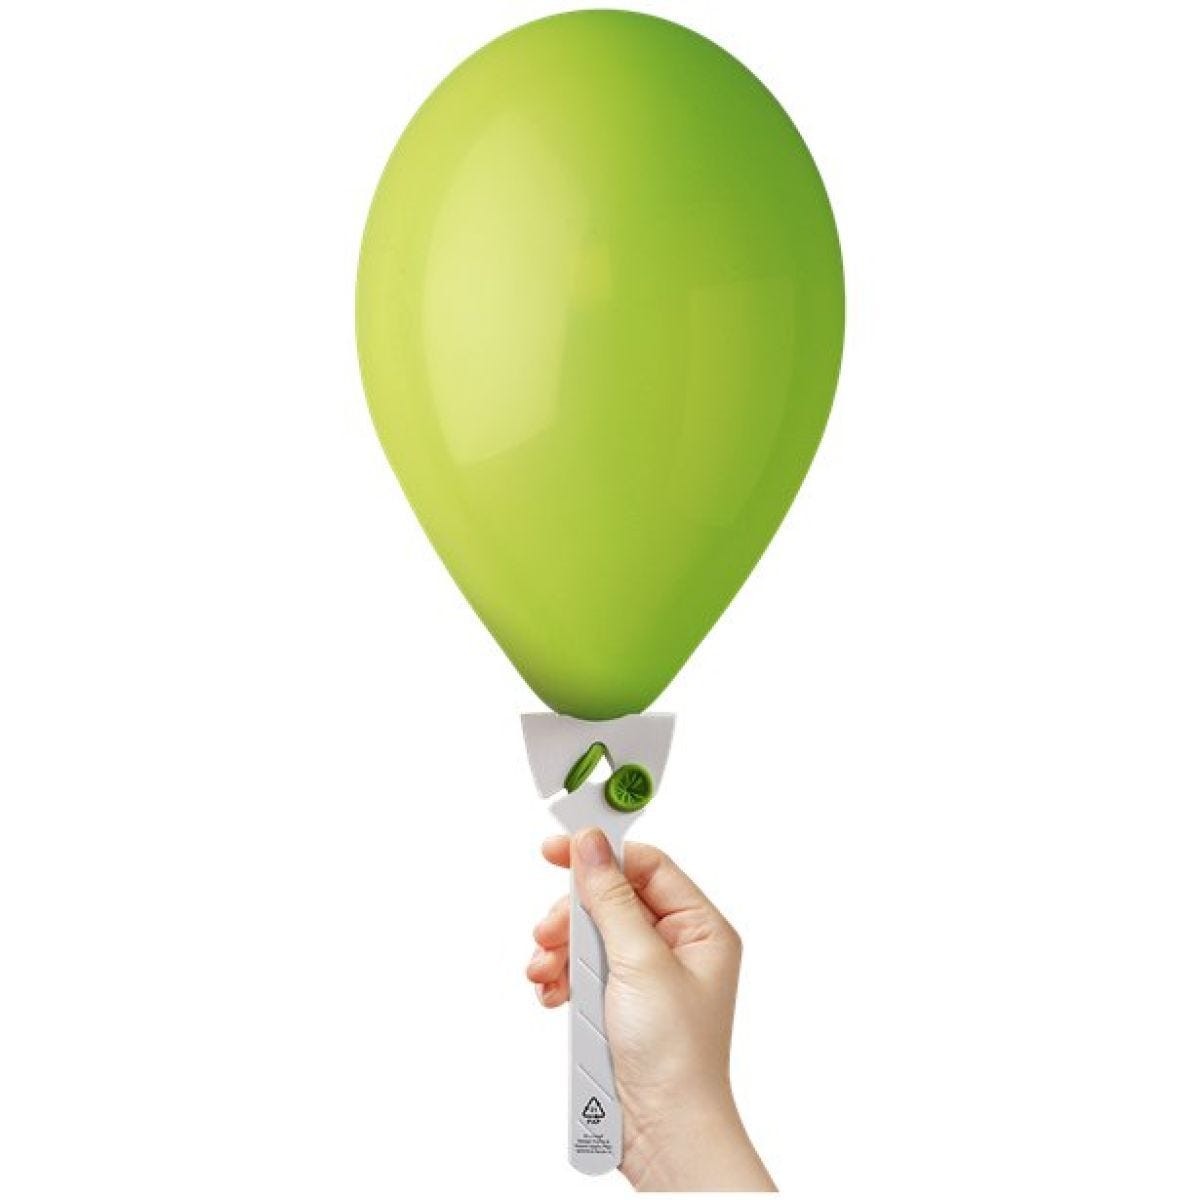 Bloony White Cardboard Balloon Holder